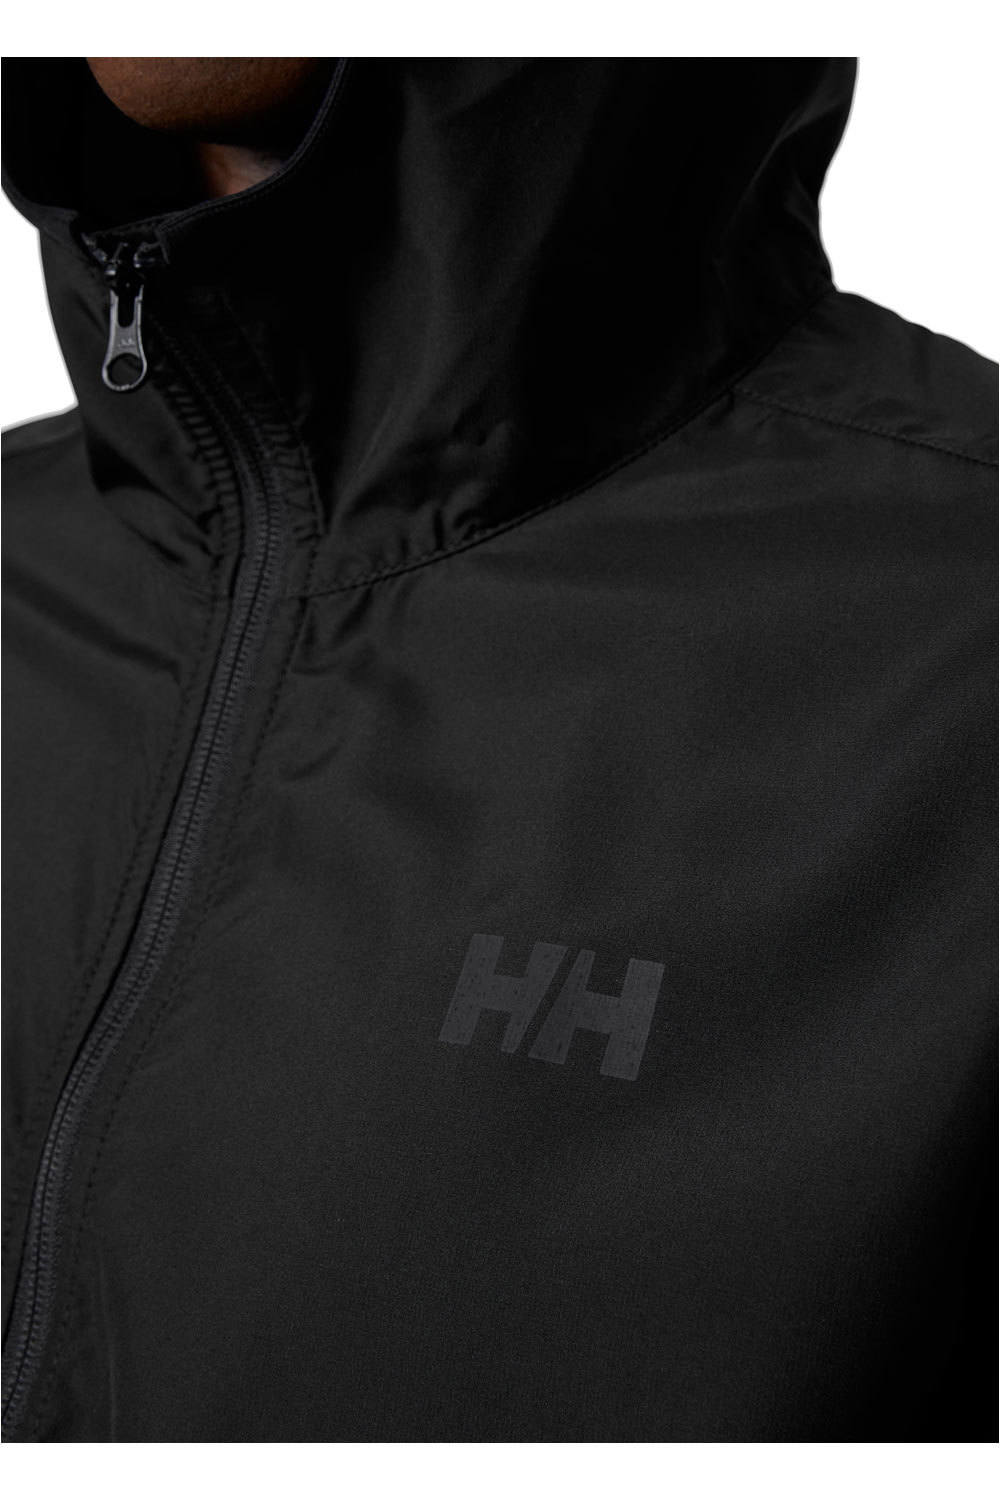 Helly Hansen chaqueta impermeable hombre JUELL LIGHT JACKET 03